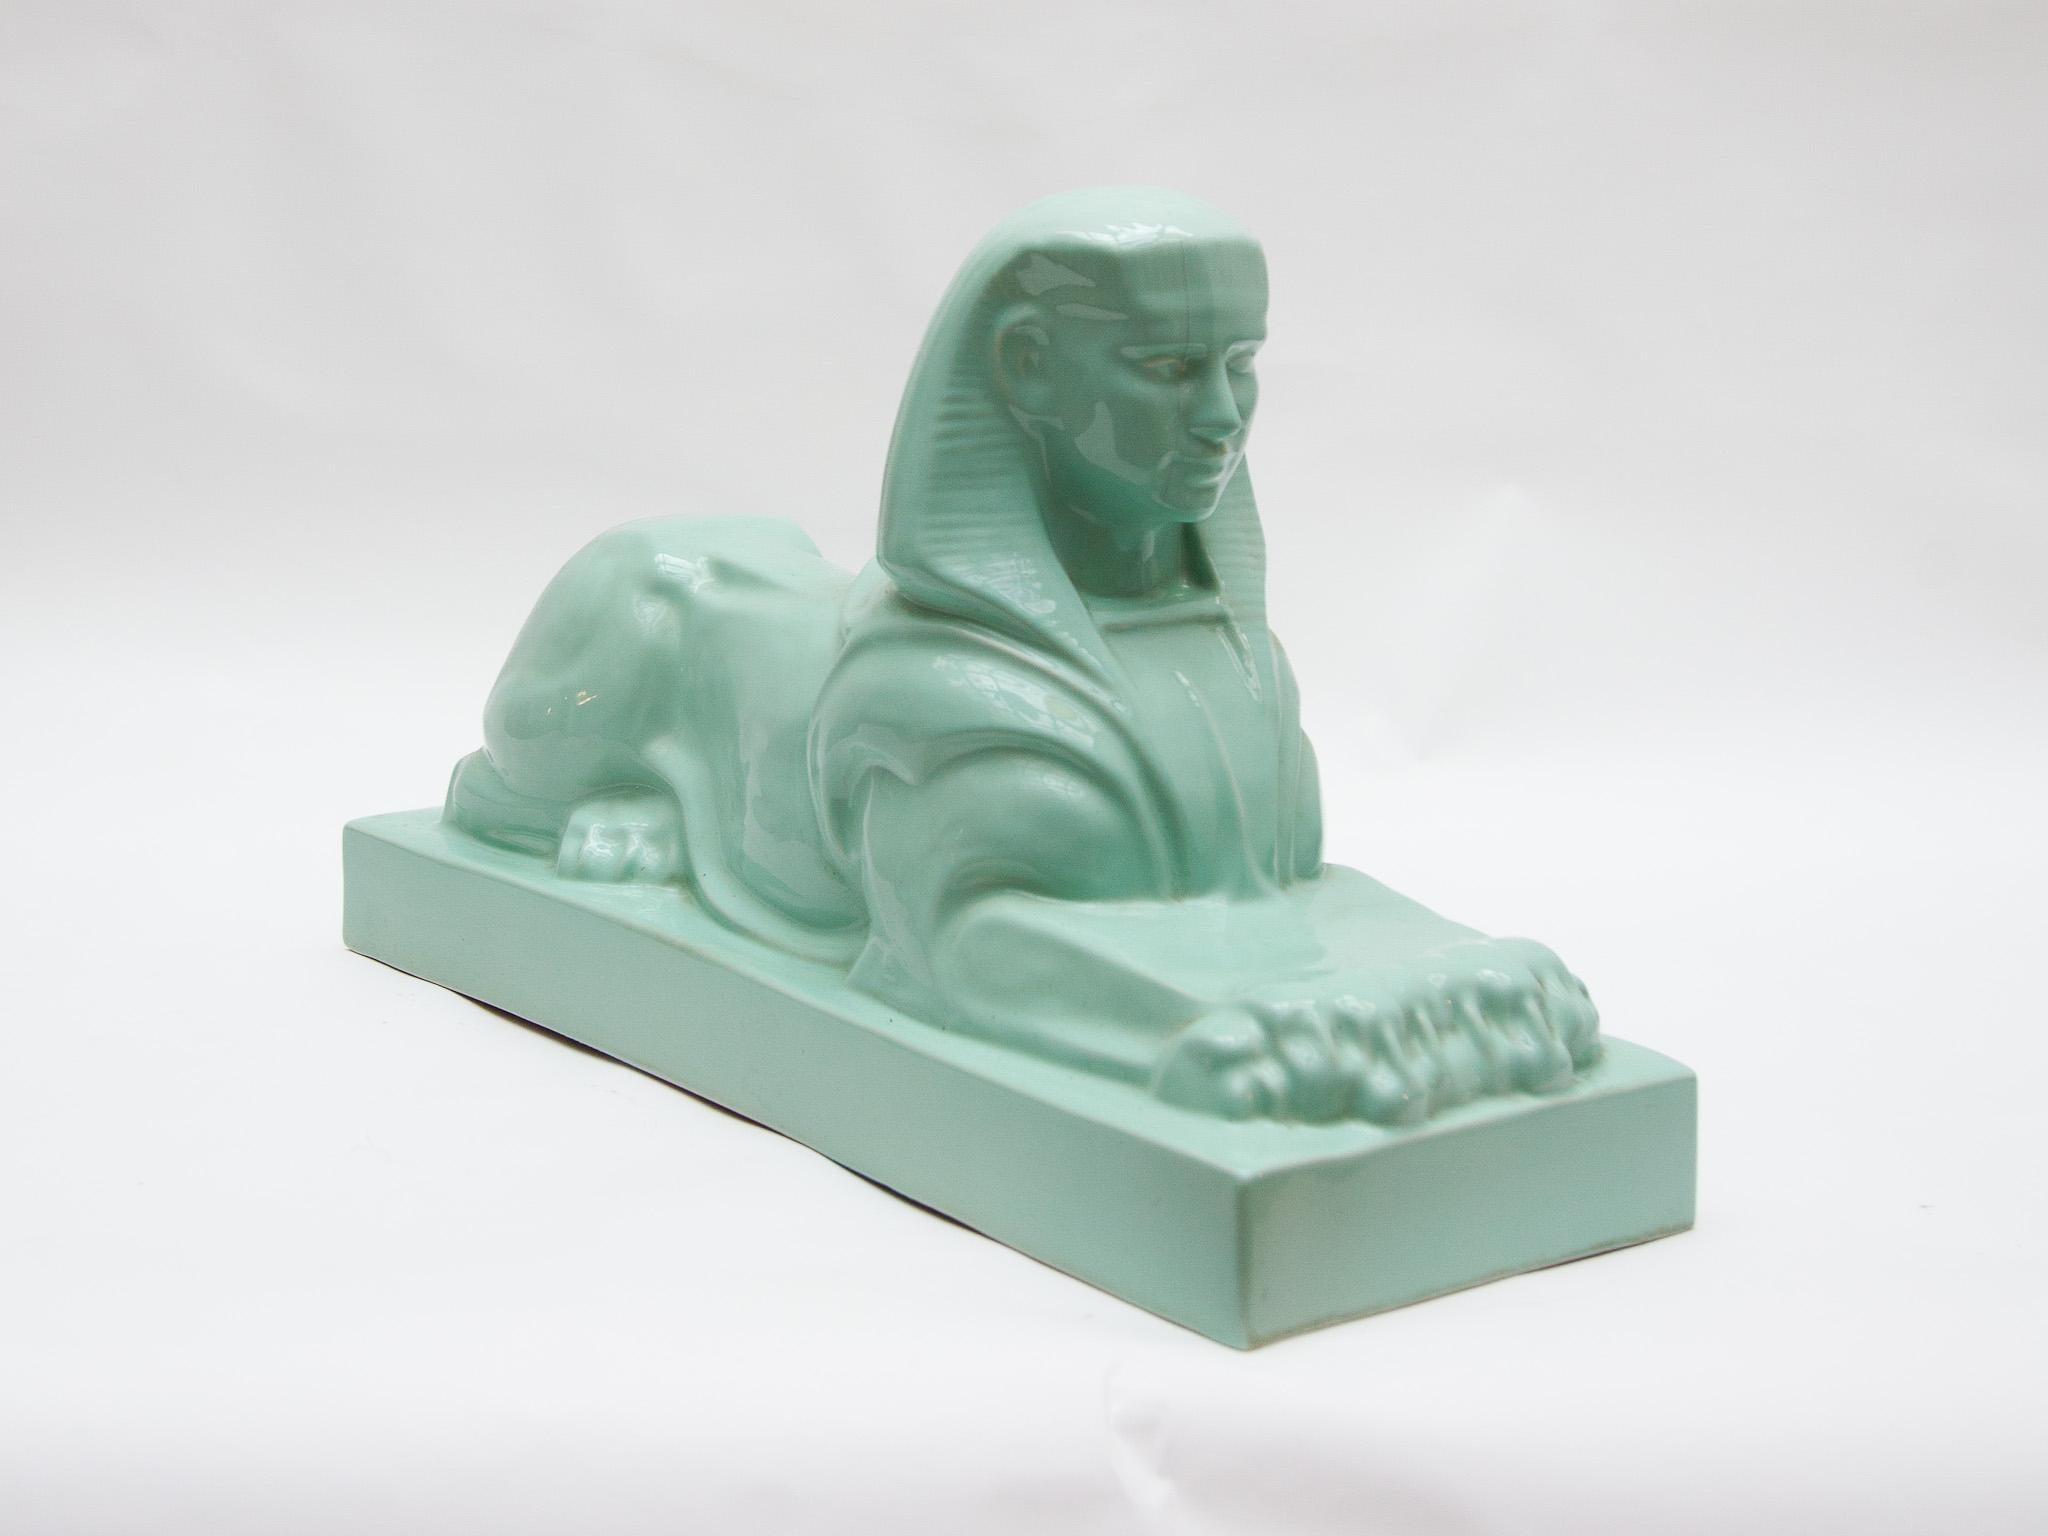 Dutch Ceramic Sphinx Designed by Vos for Royal Sphinx Maastricht/ Petrus Regout